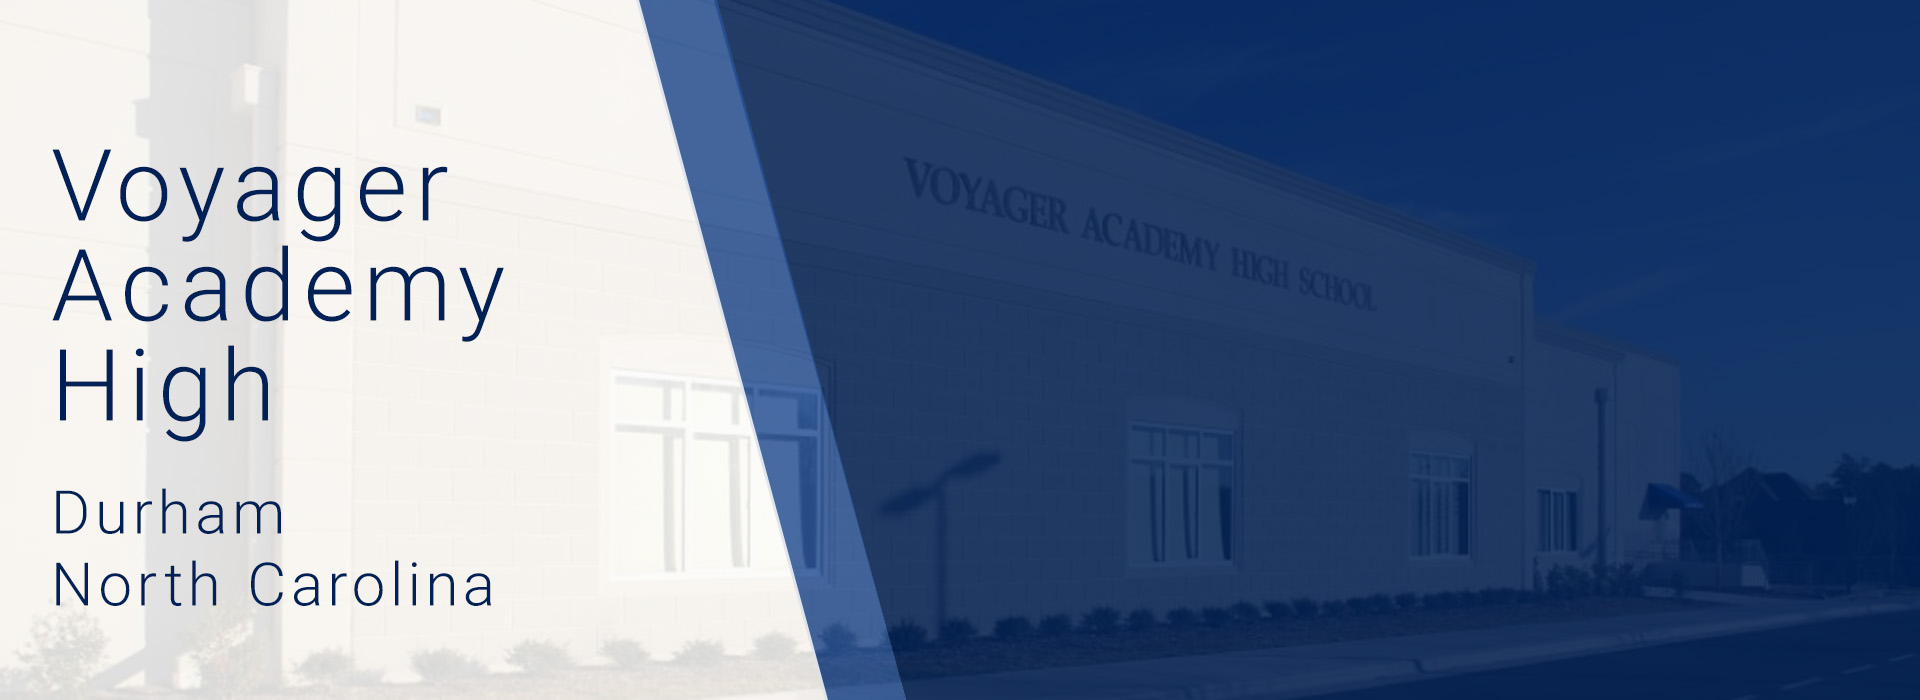 Voyager Academy High School